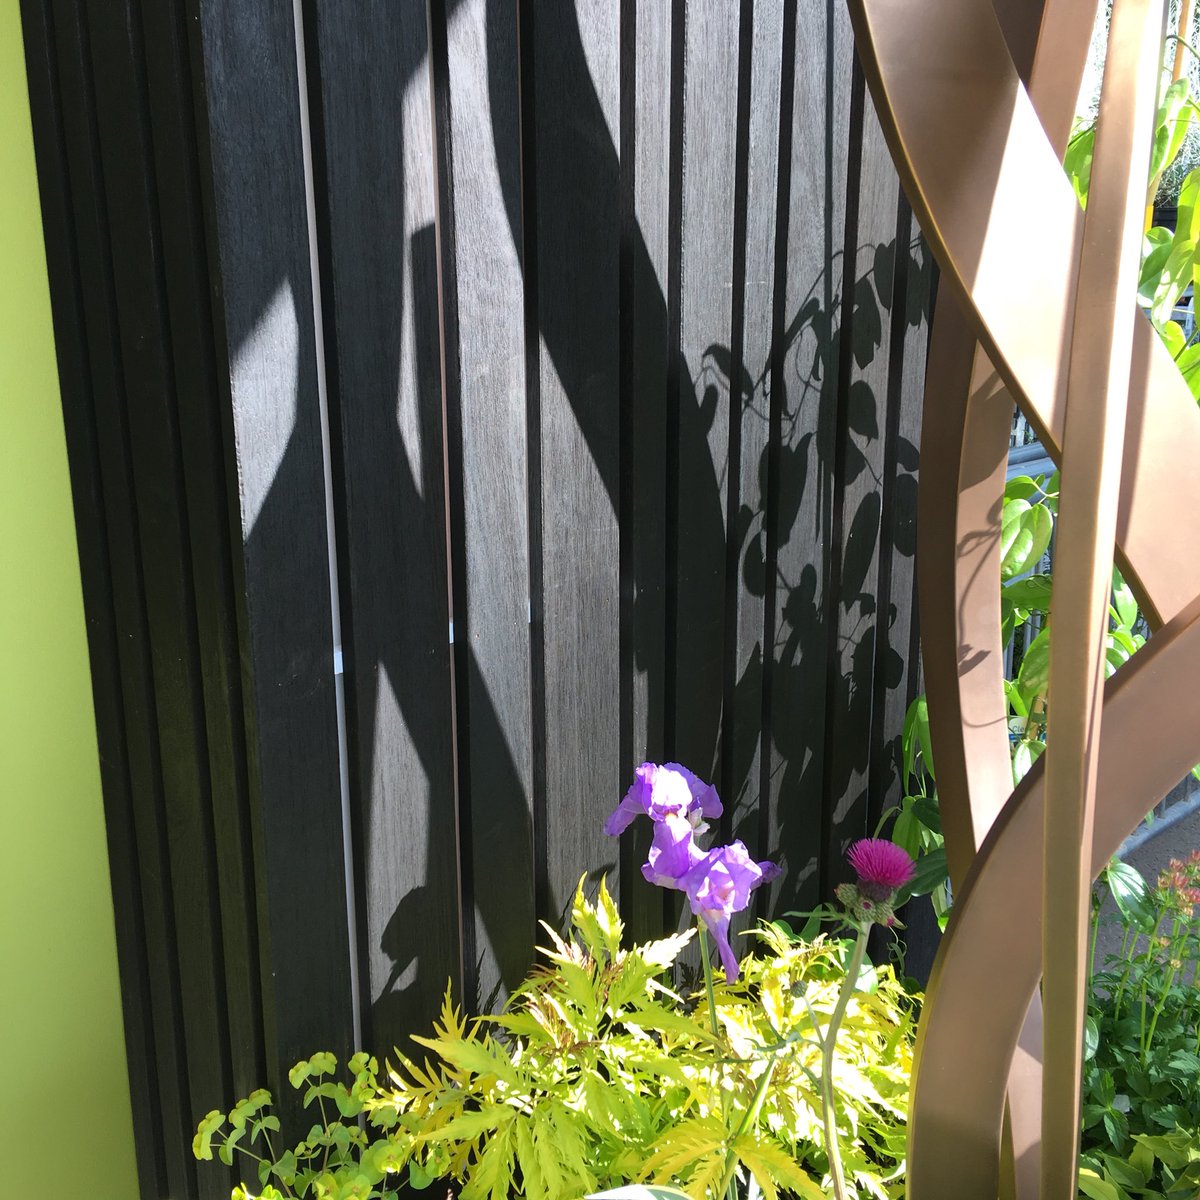 Yukari cladding used by Sarah Naybour in her garden design